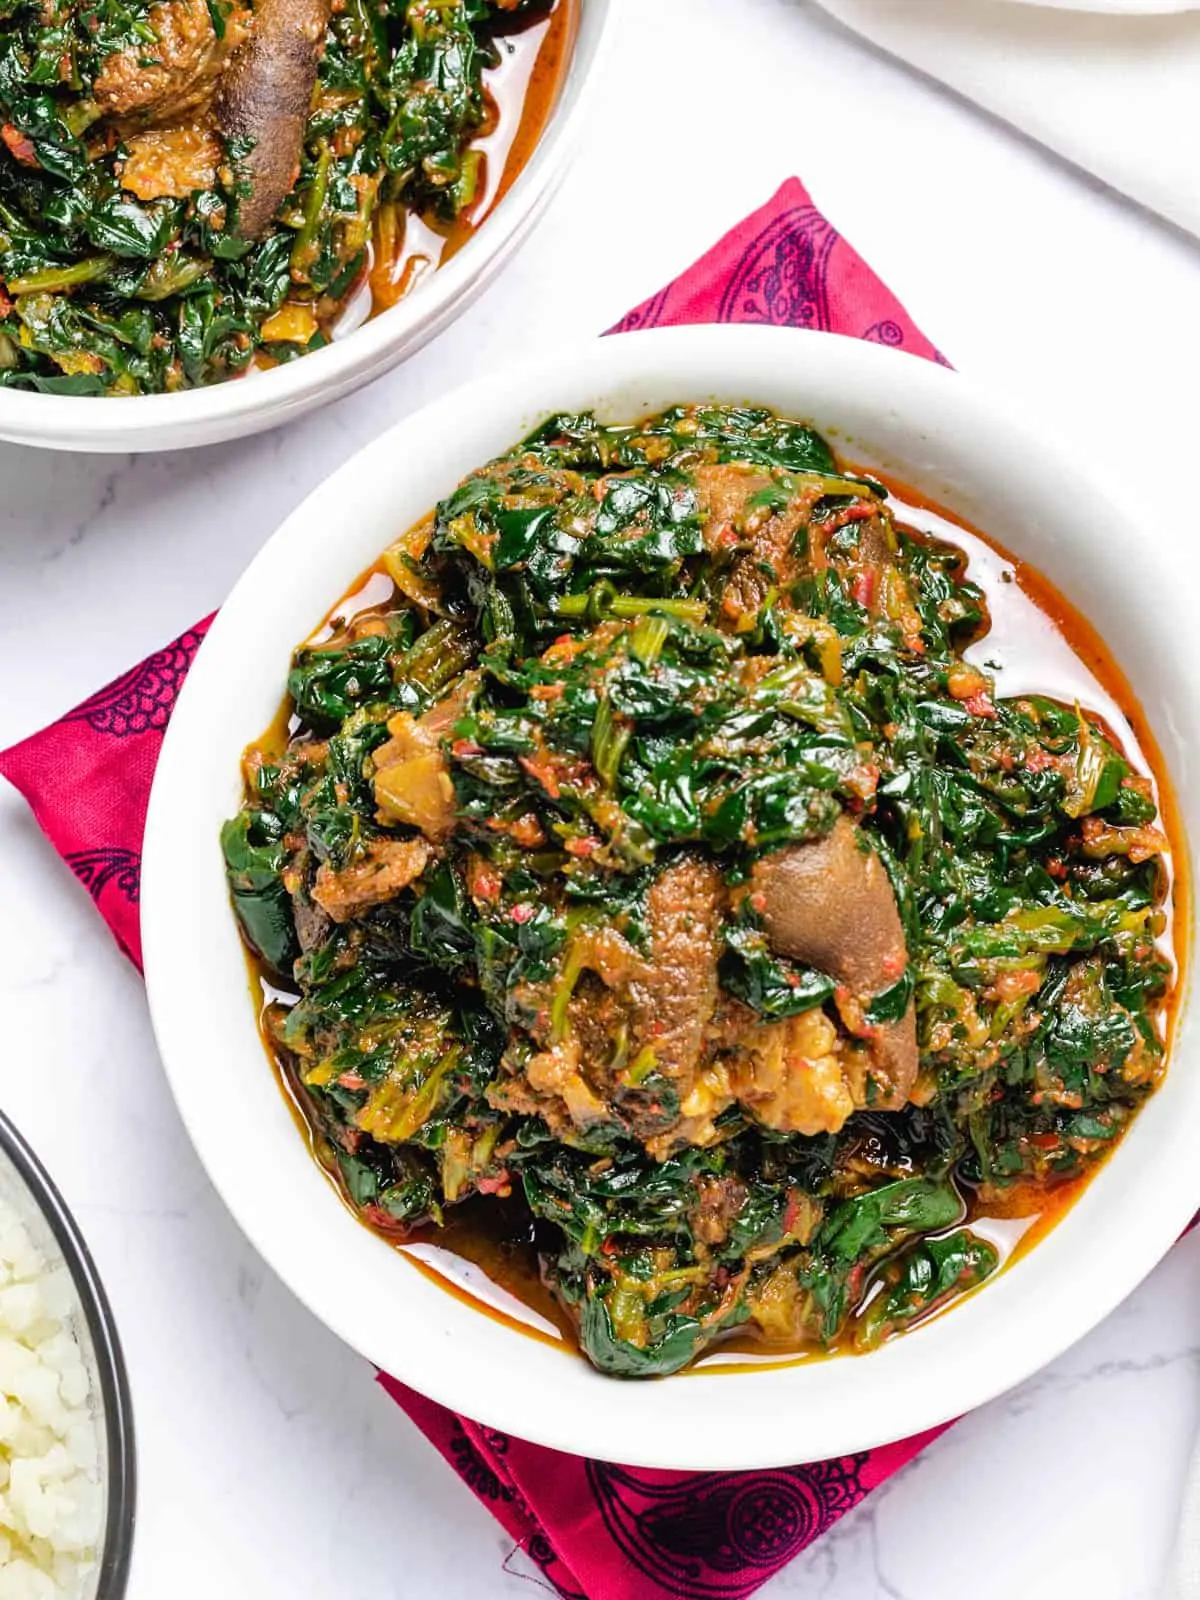 nigerian spinach stew in a white bowl